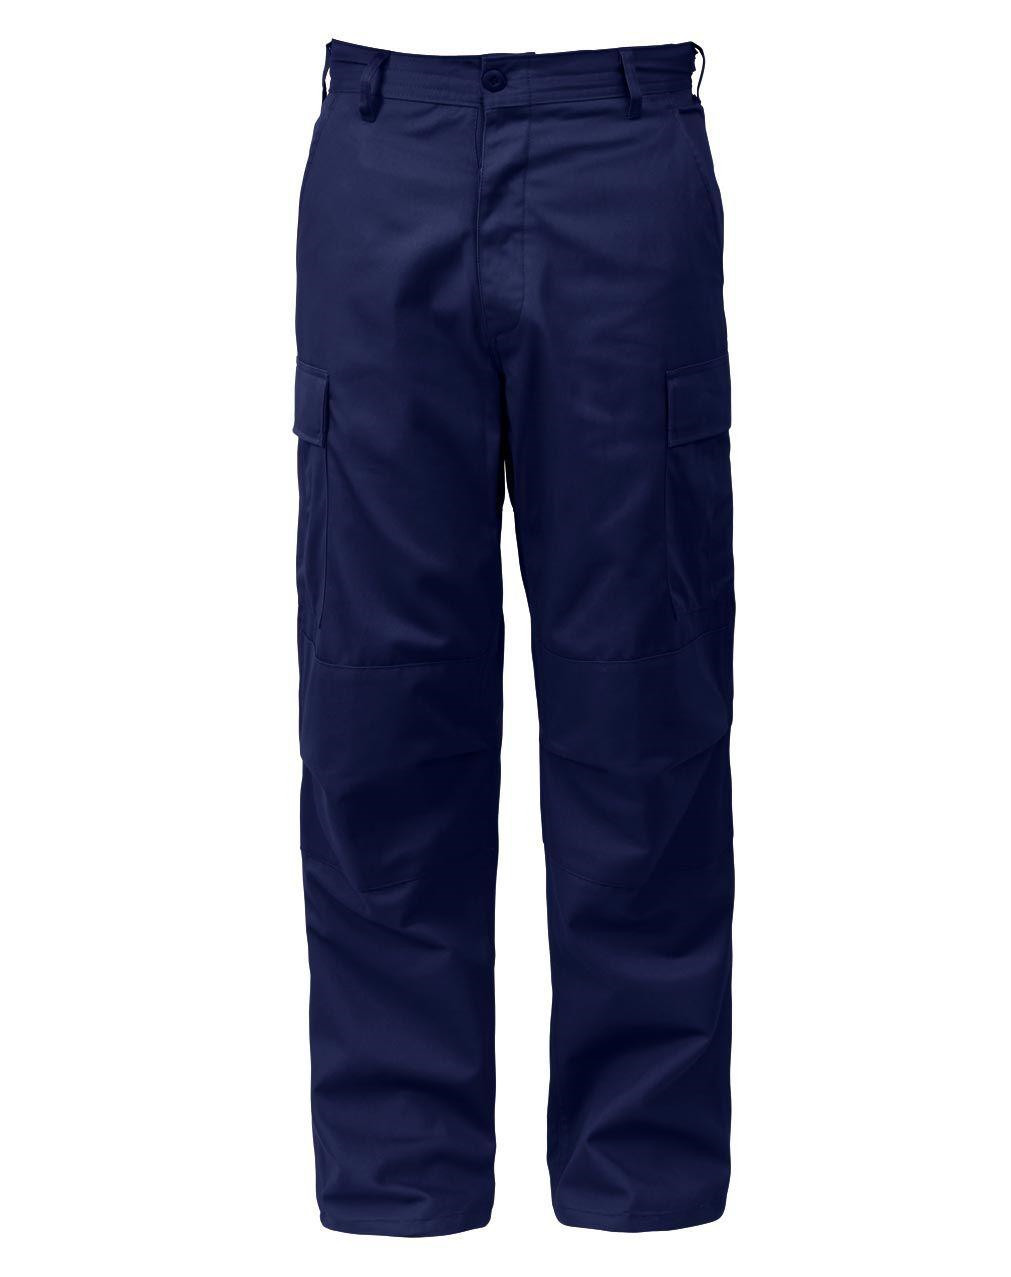 Rothco Uniform Bukser (Navy, XL)